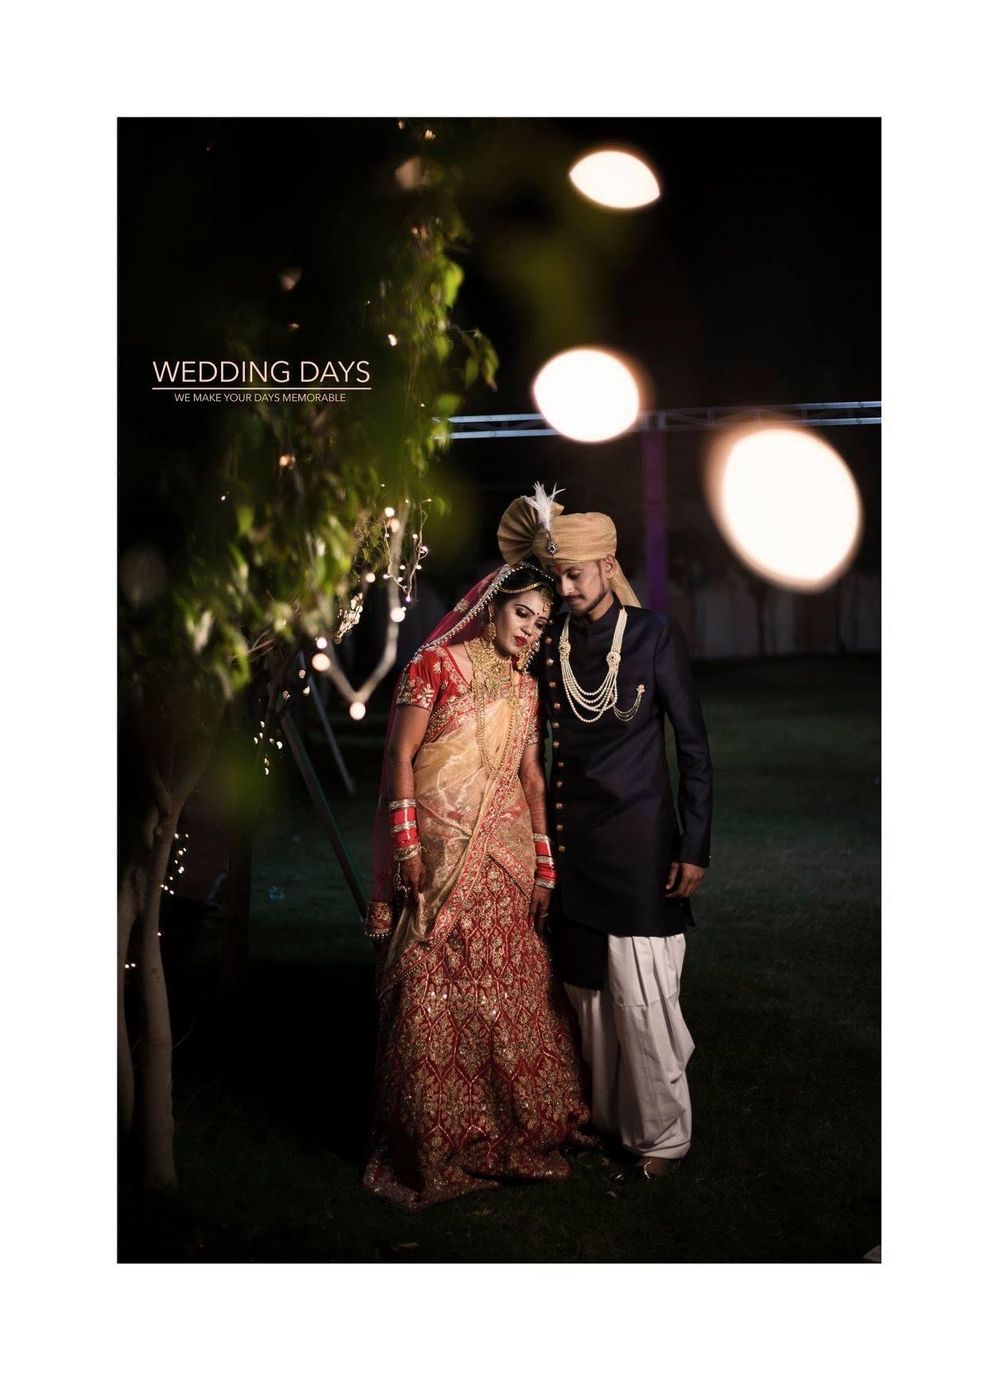 Photo From wedding days of Anurag  - By Wedding Days